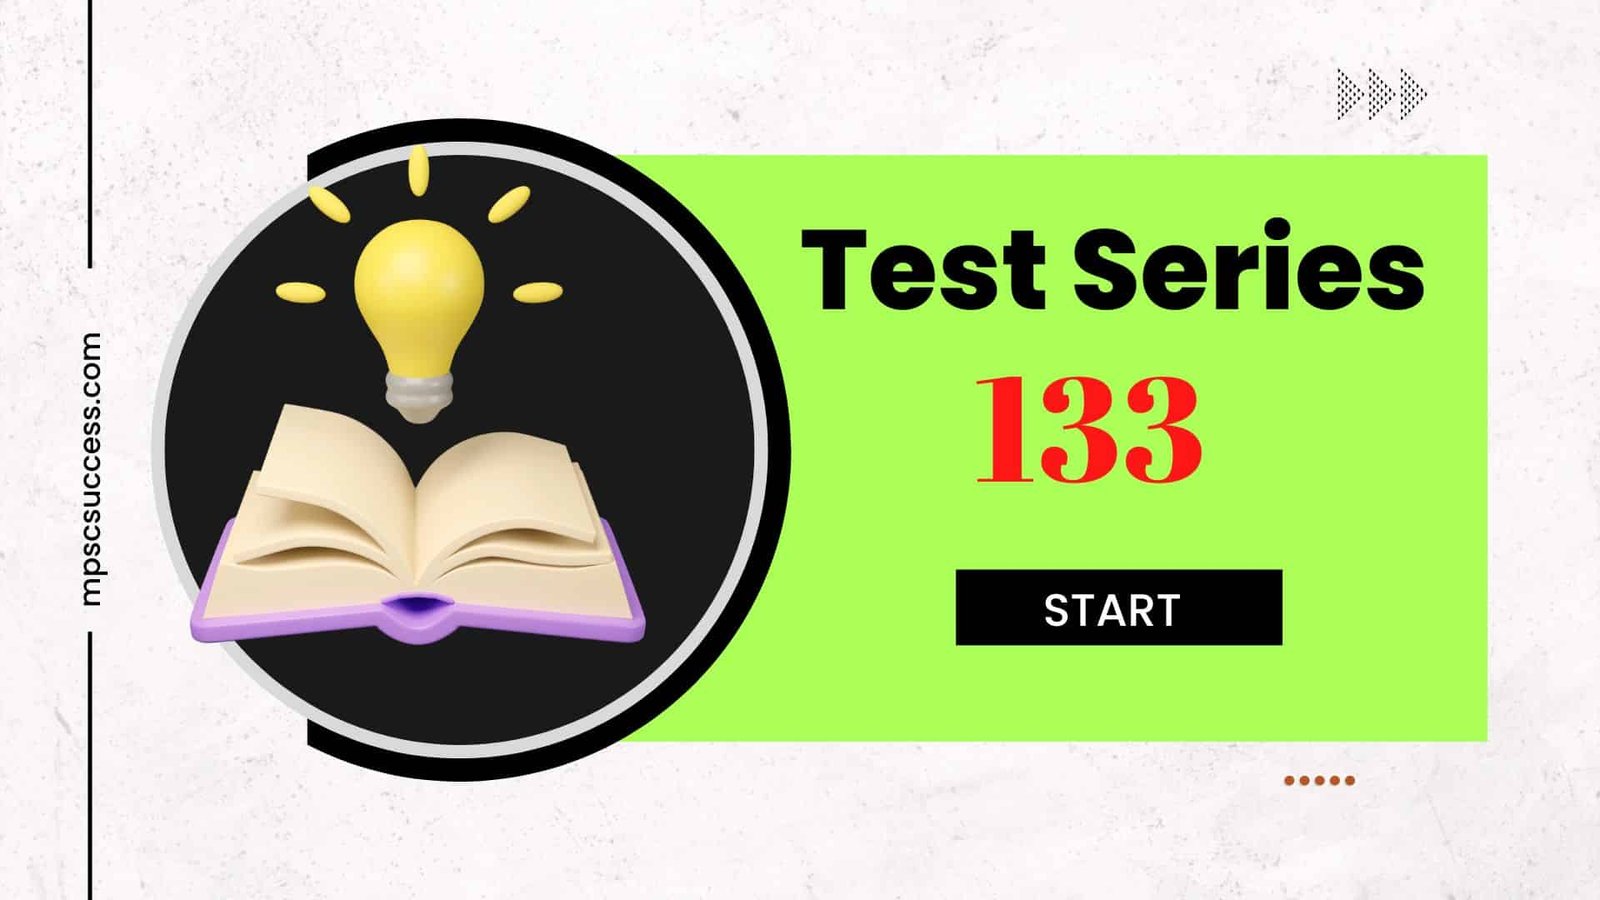 Test Series 133